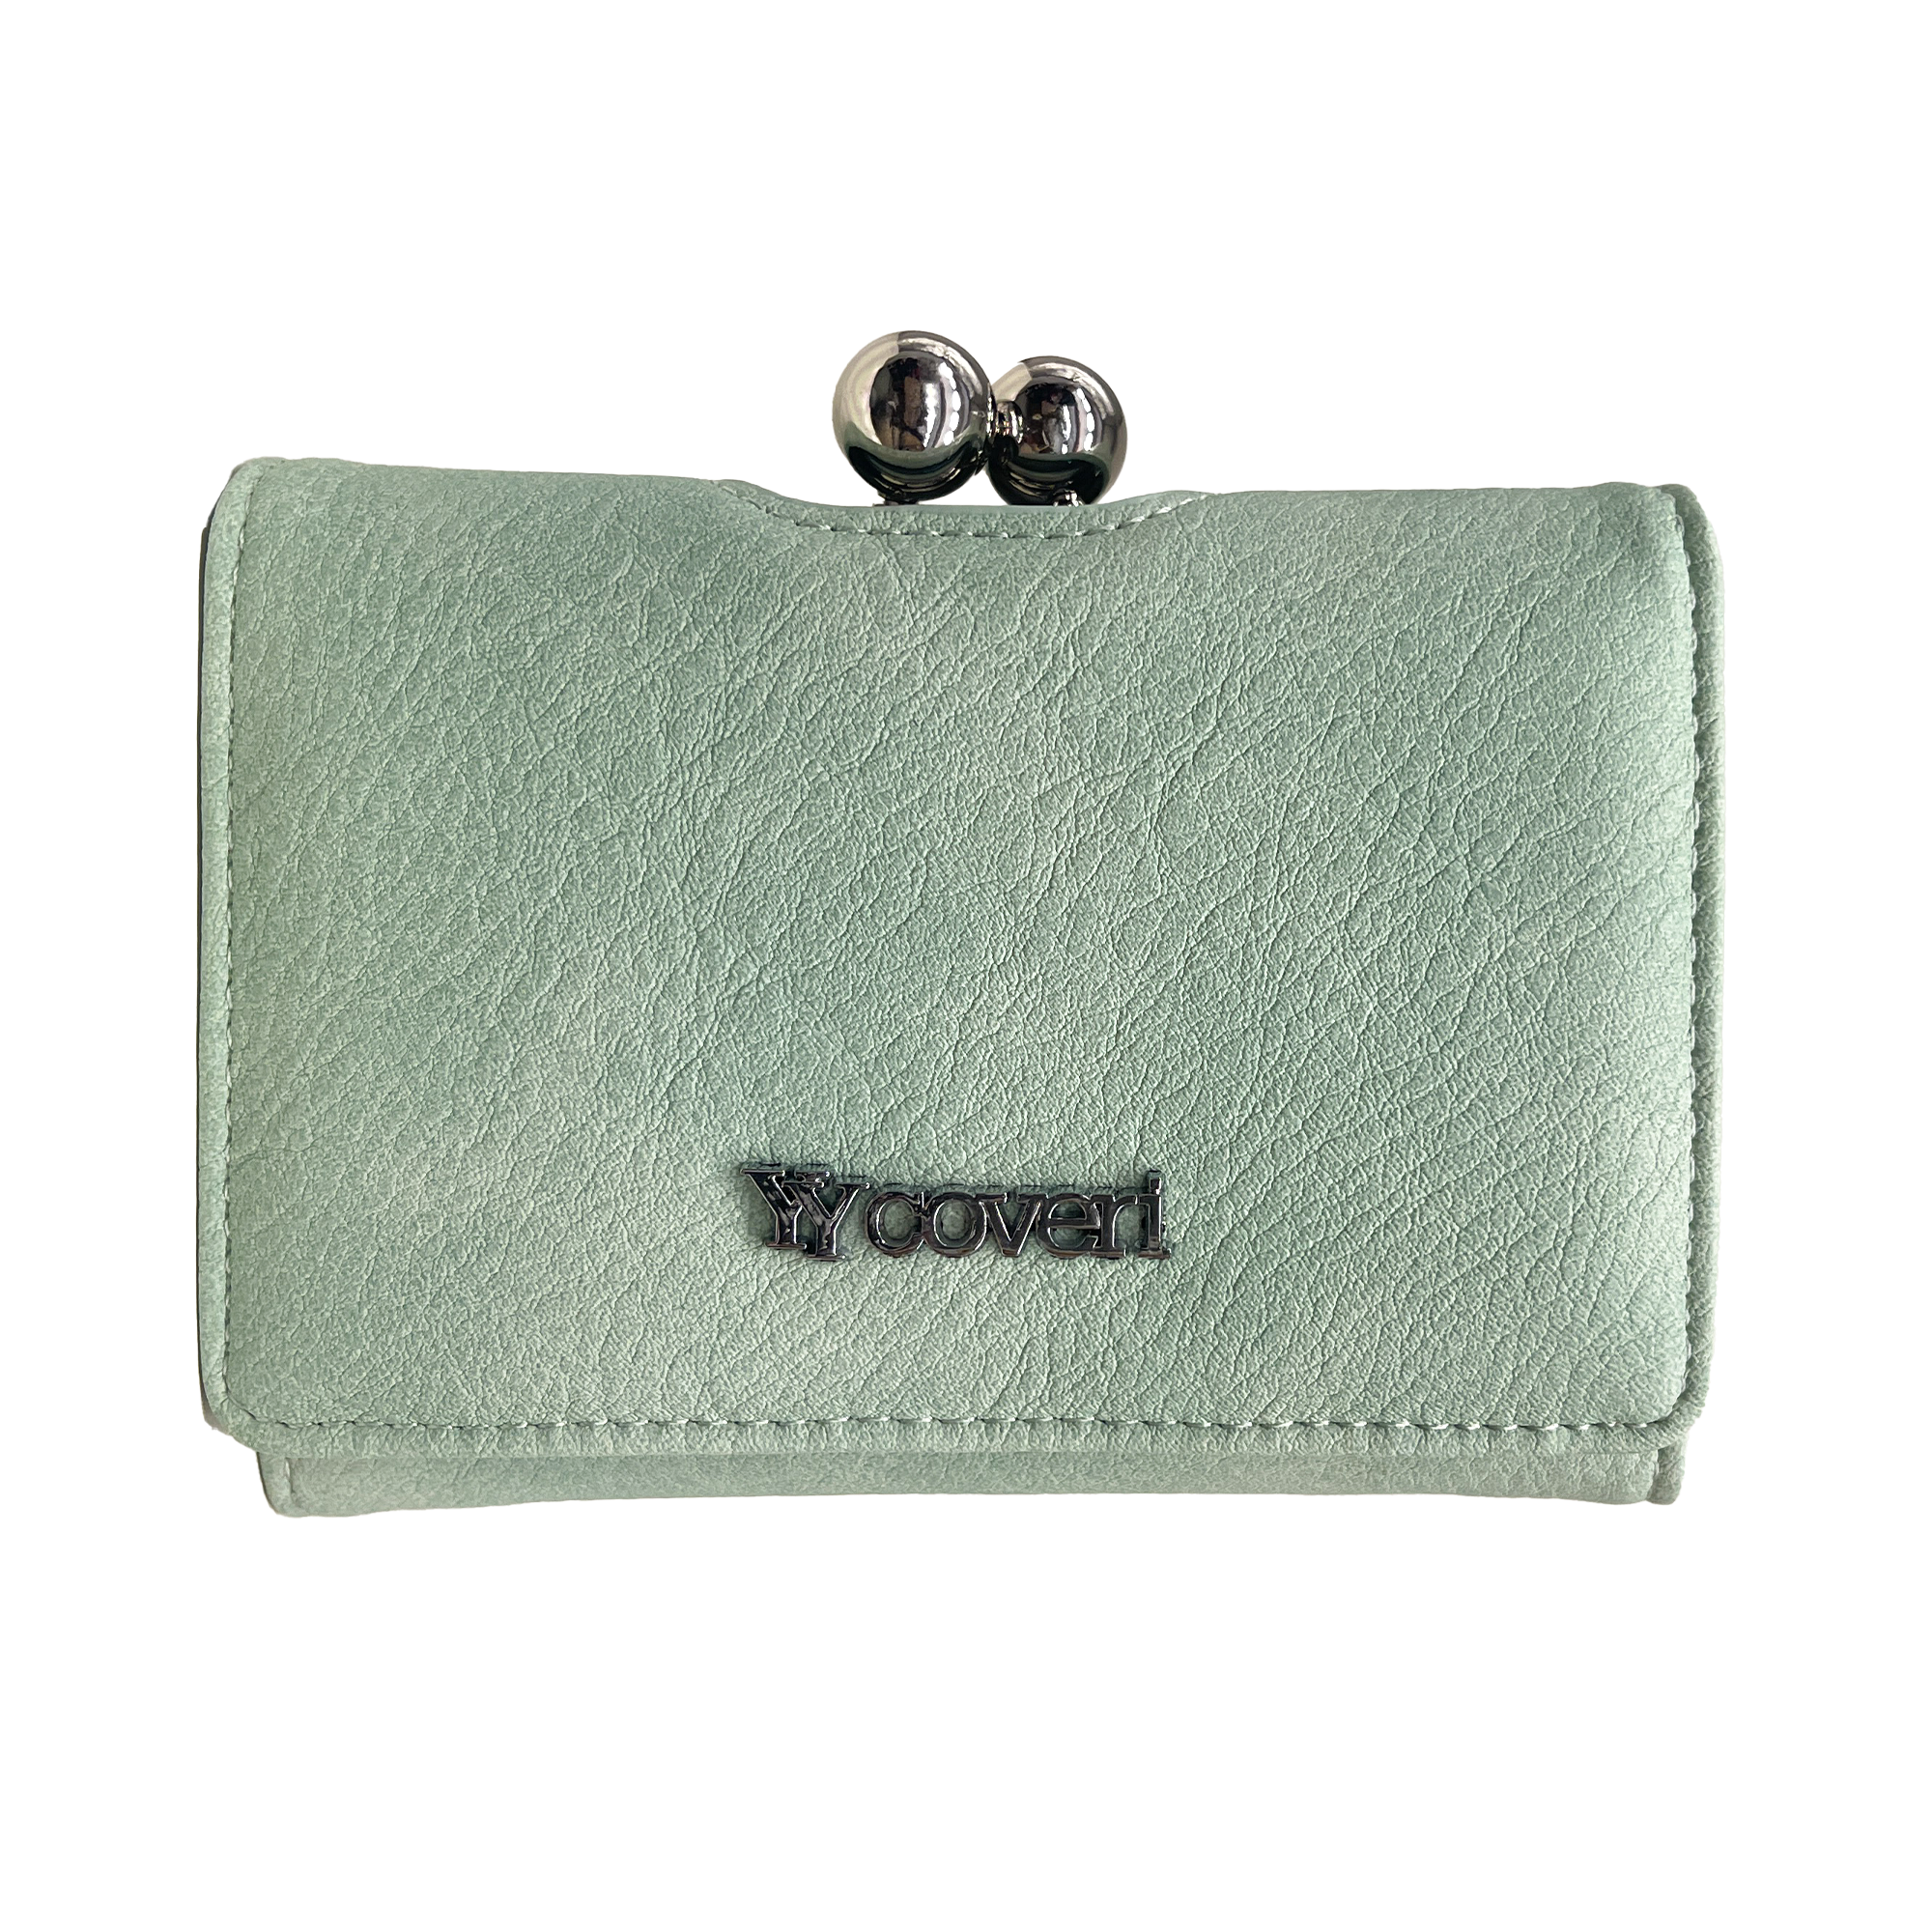 Yy Coveri Women's Wallet 13.2x12x4cm Cycjl803-1 #